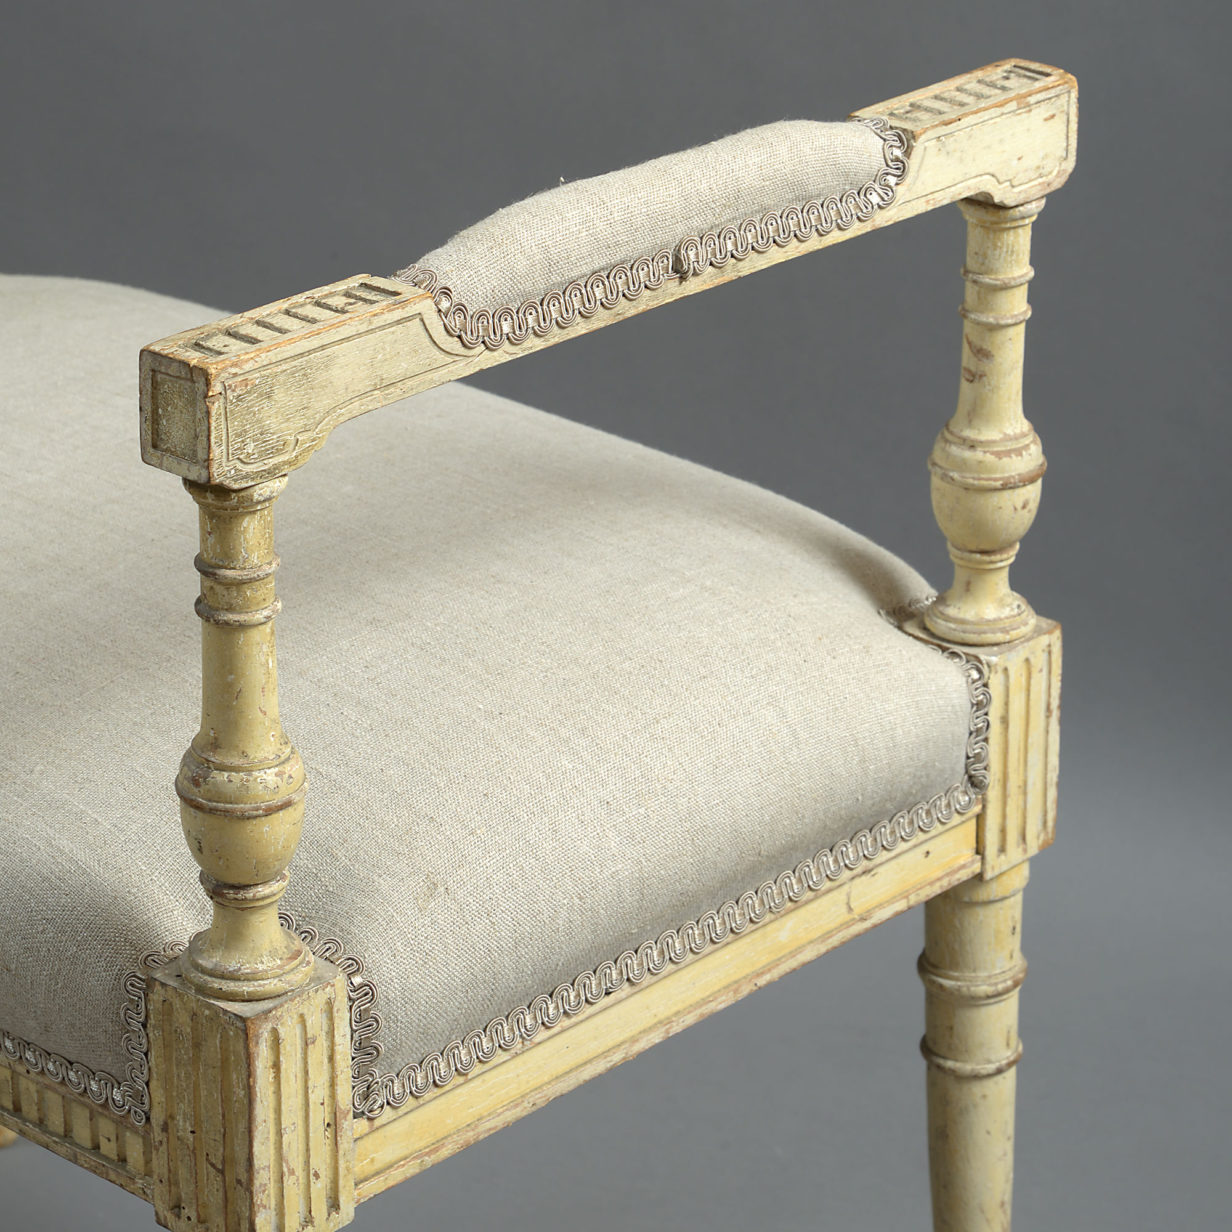 19th century cream louis xvi style stool